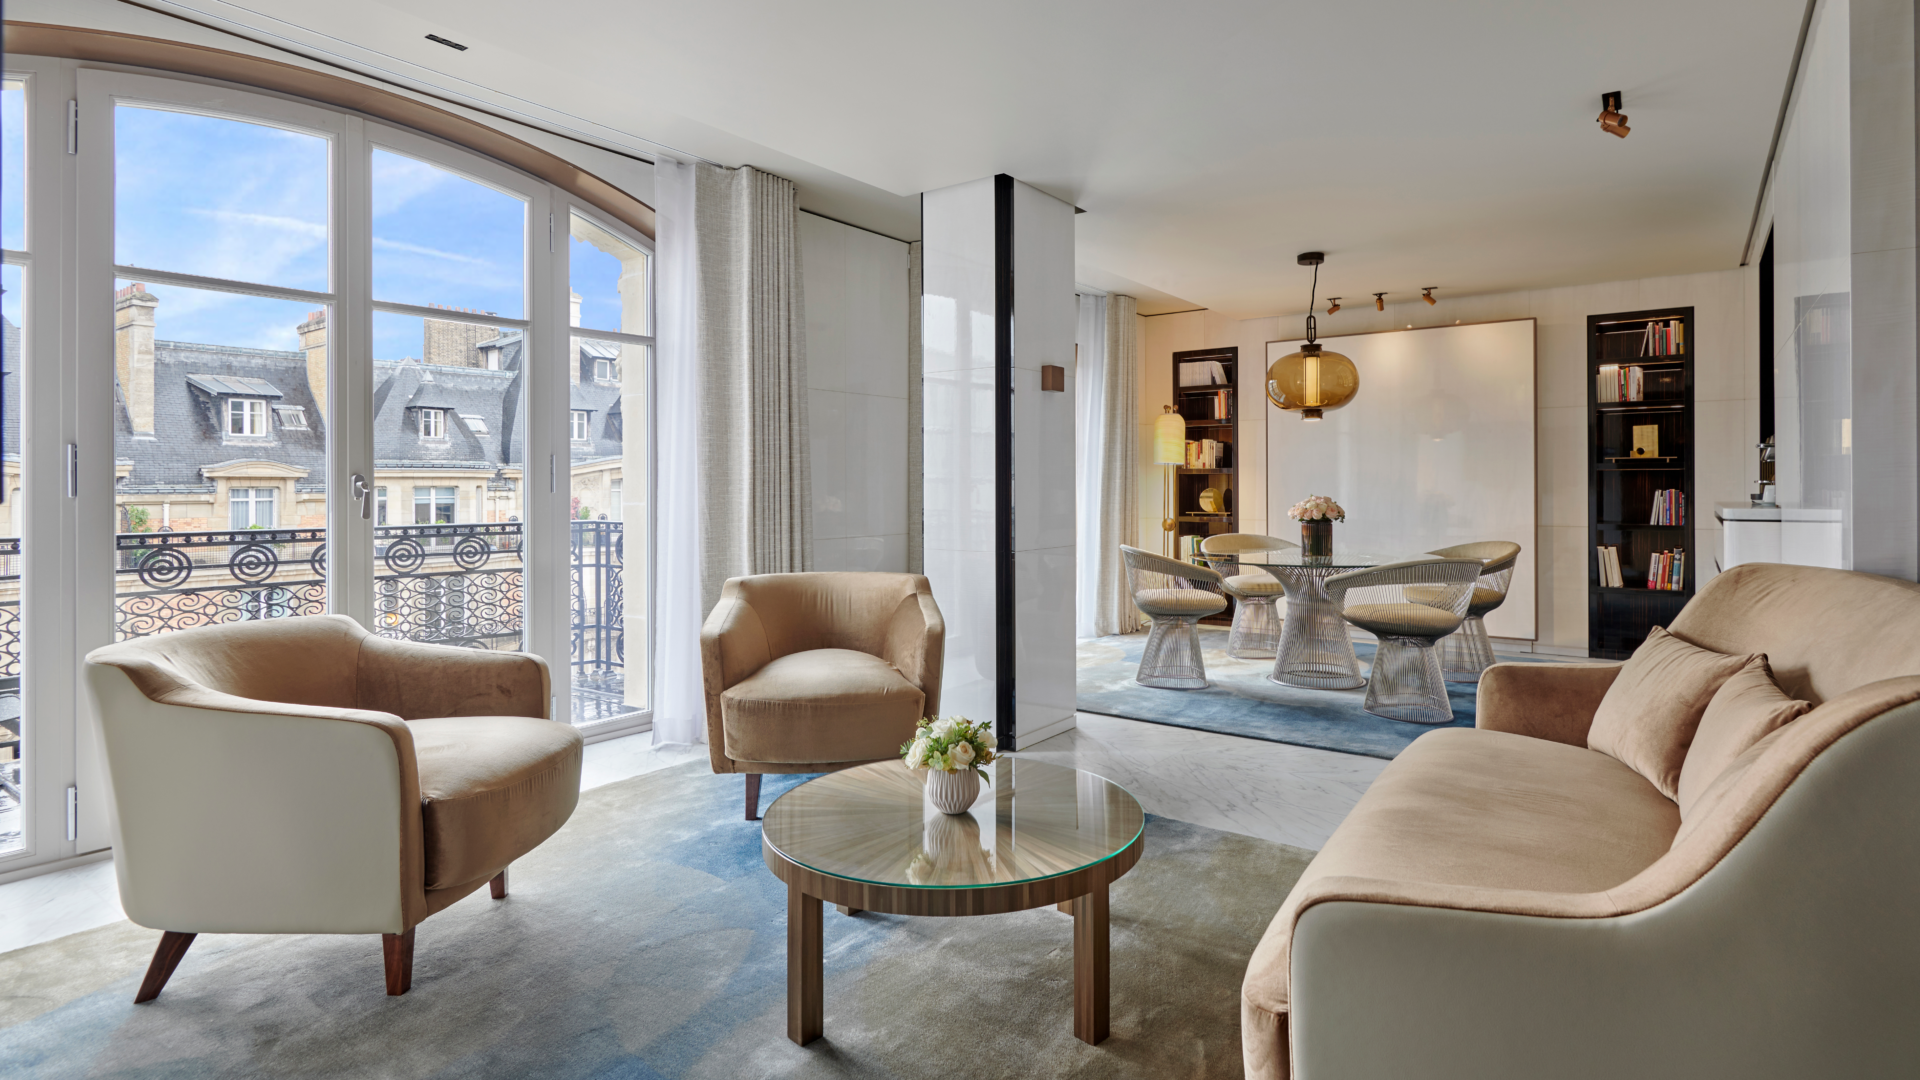 Suite Isabelle Huppert - Living Room